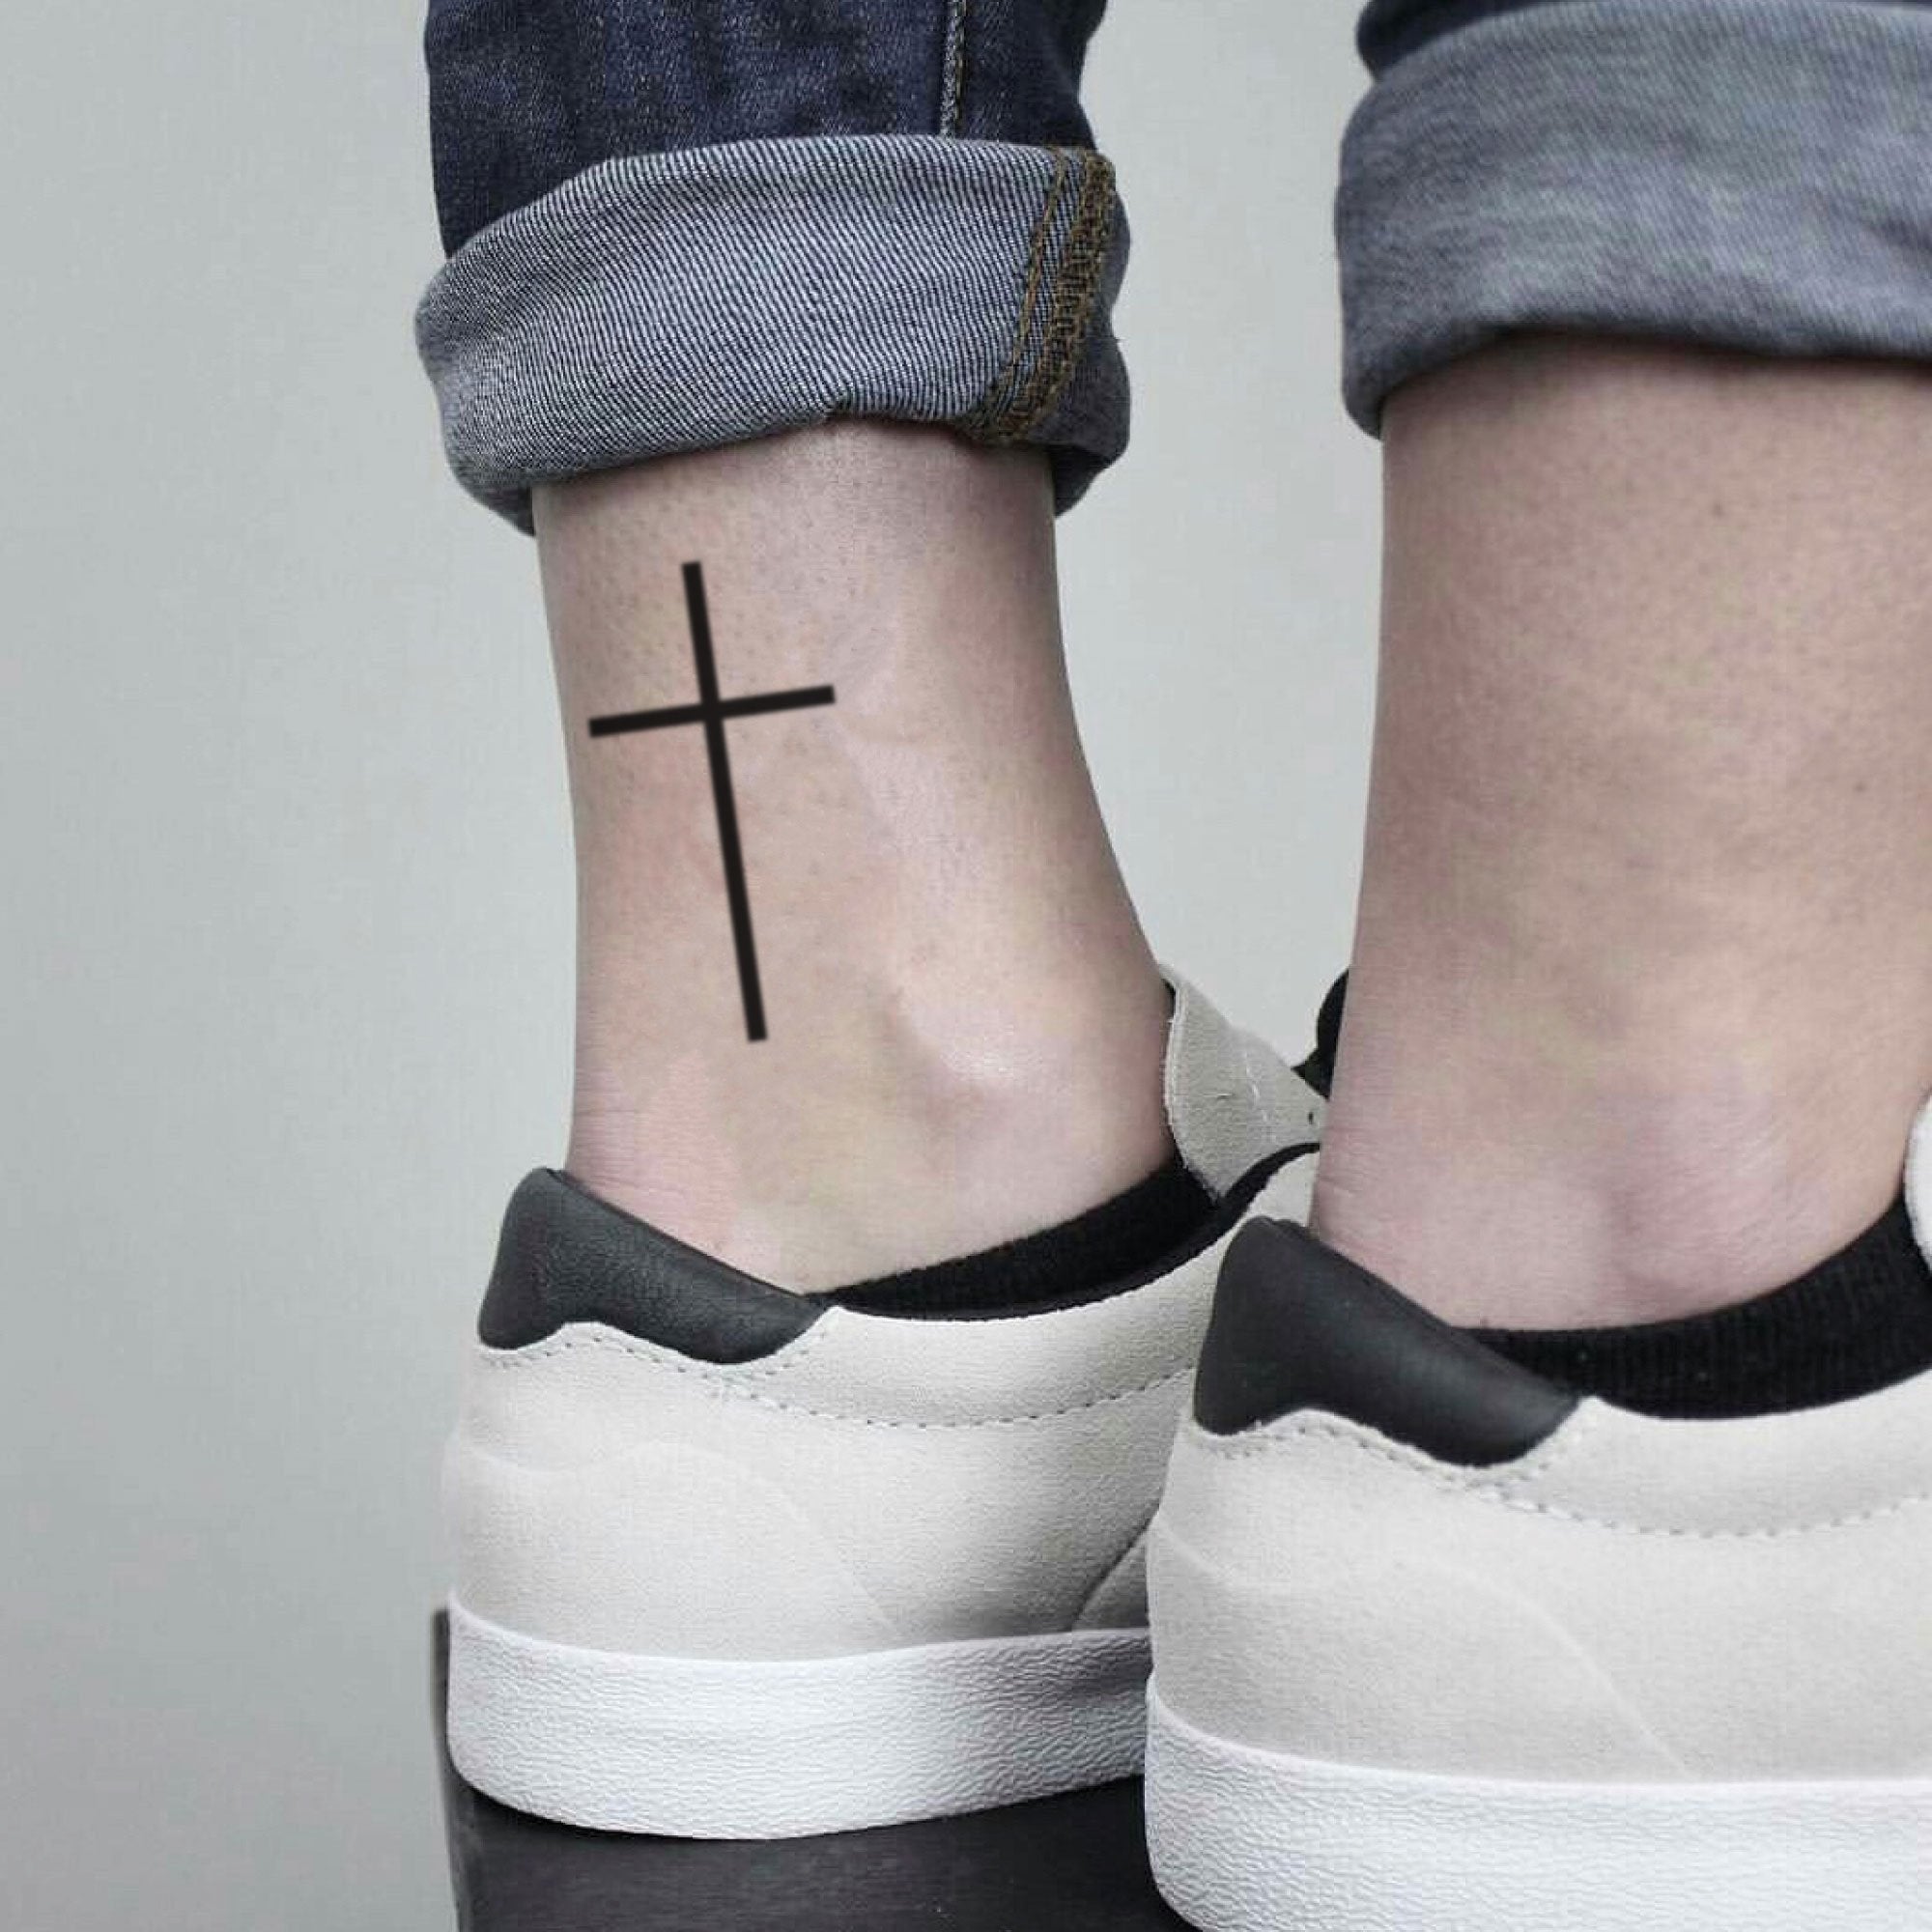 Cross Tattoo On Ankle